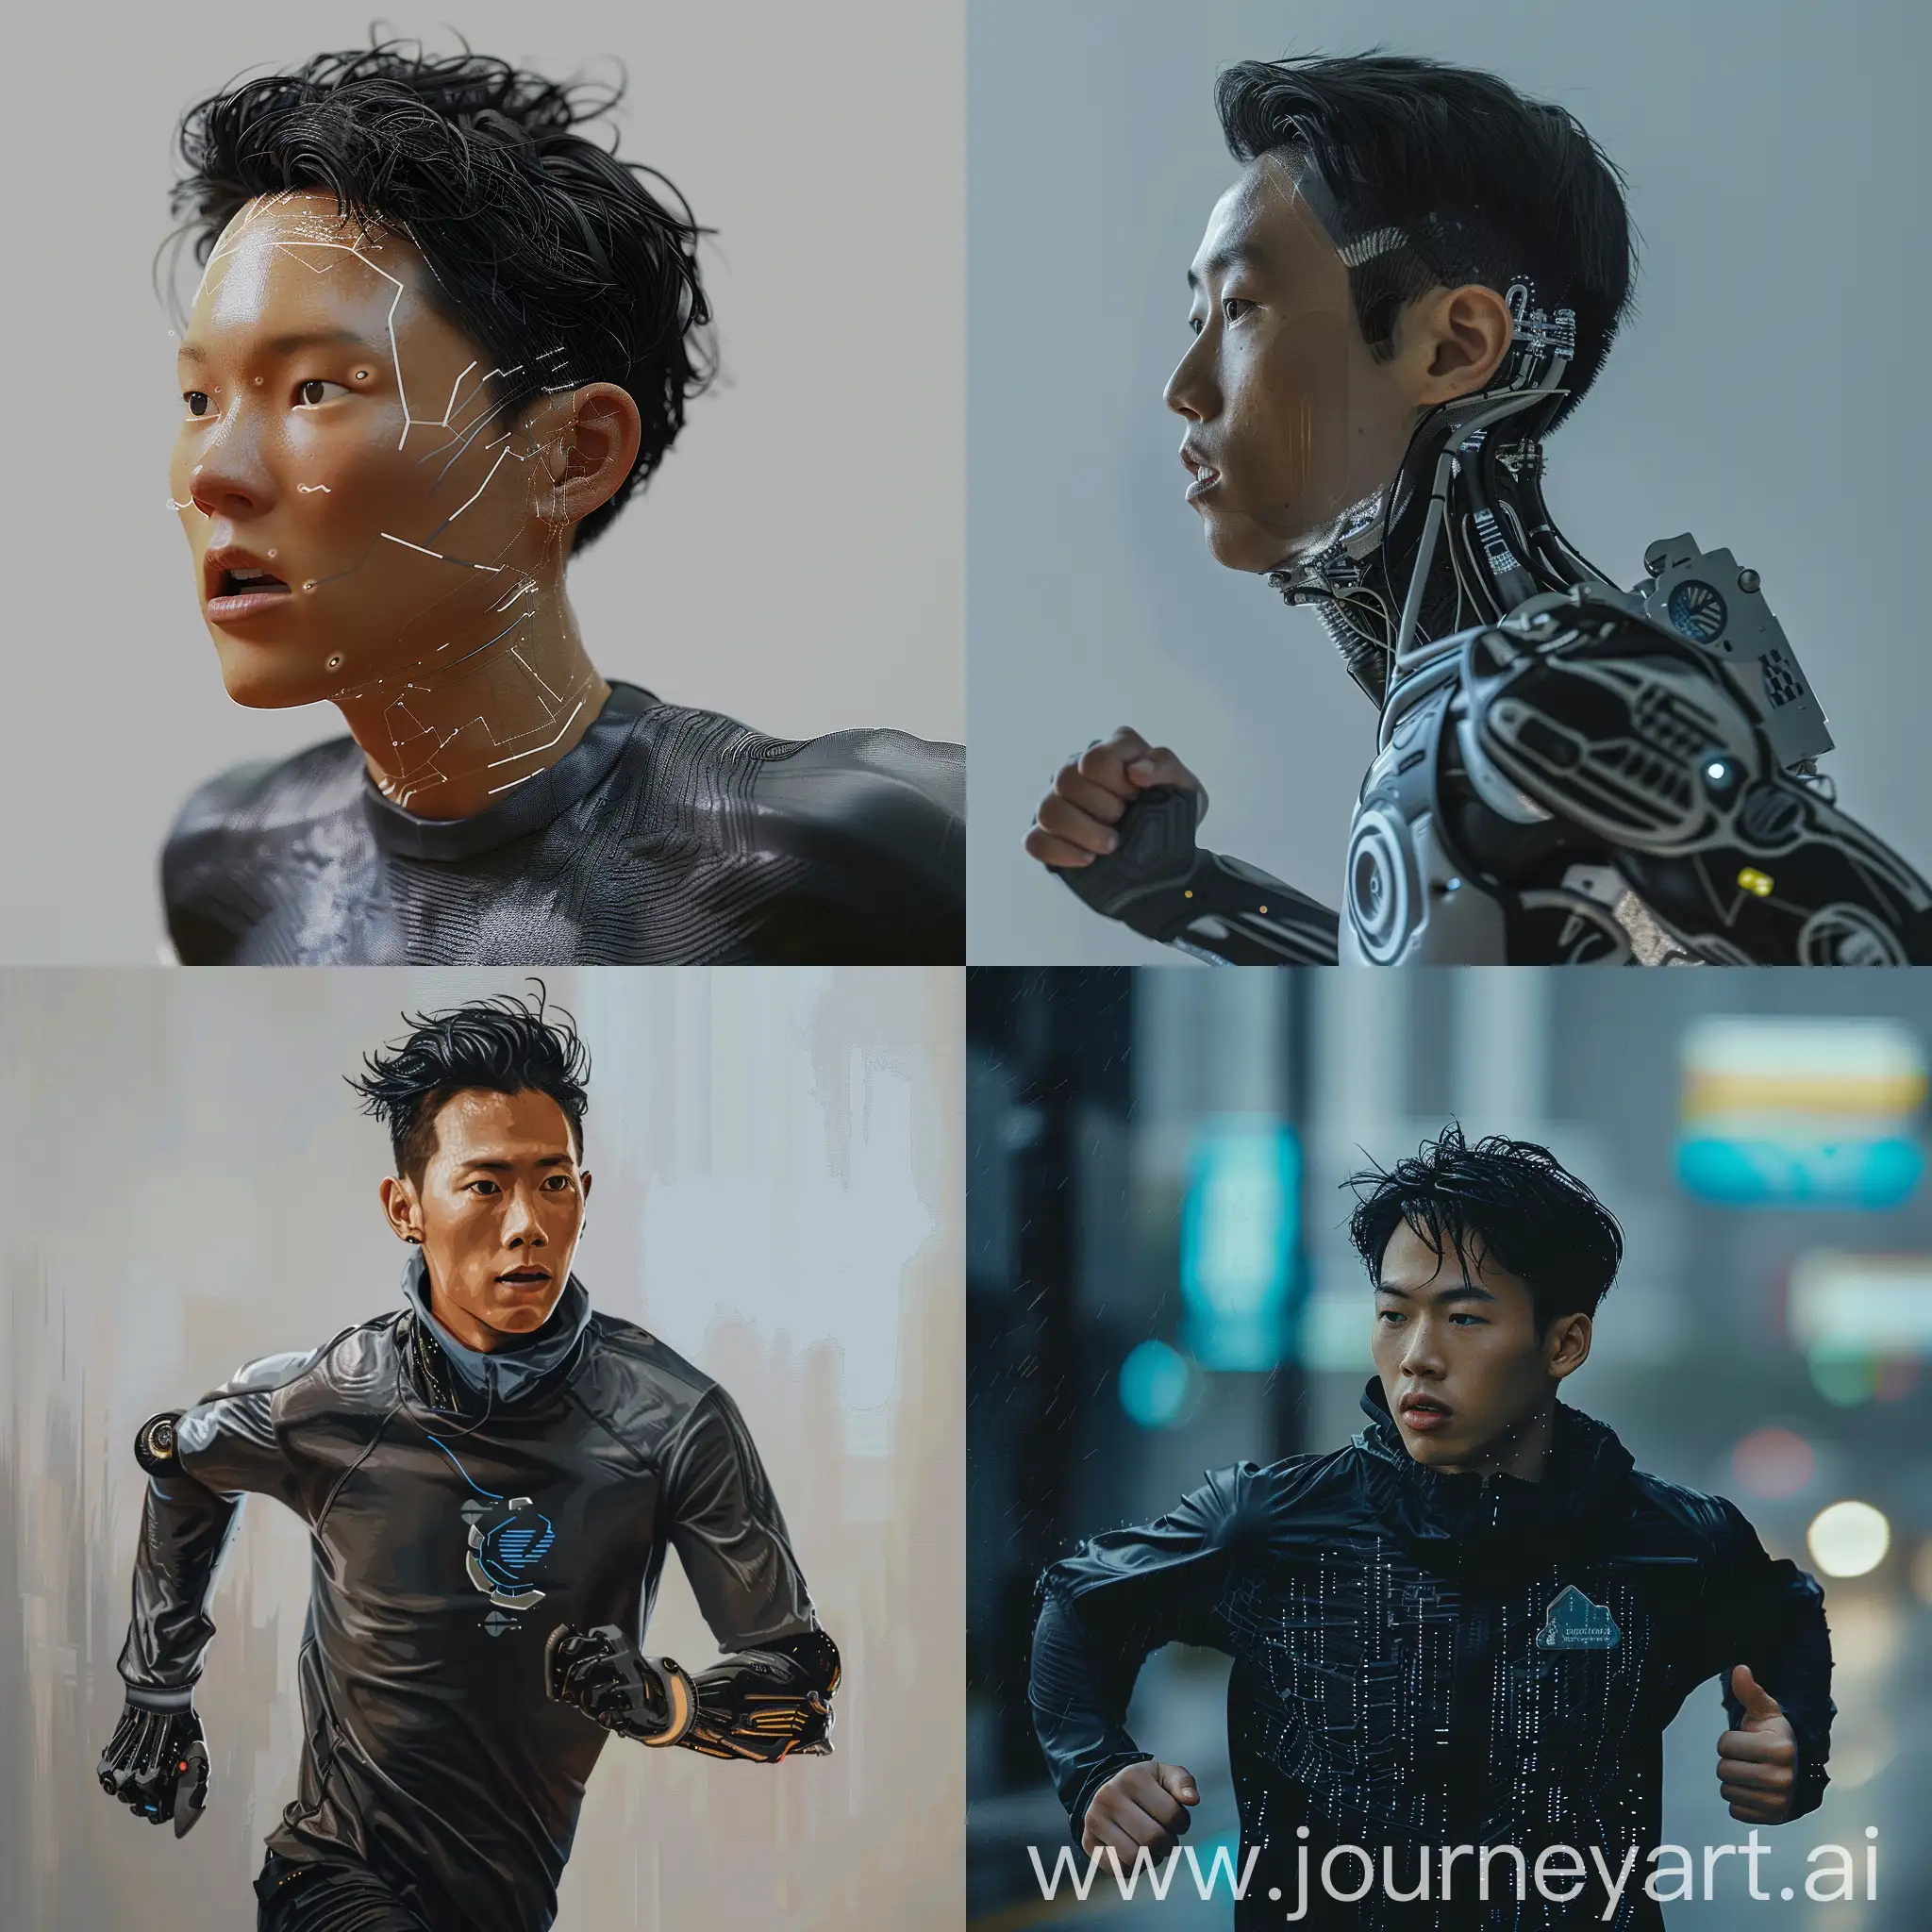 An artificial intelligence, running, asian male face